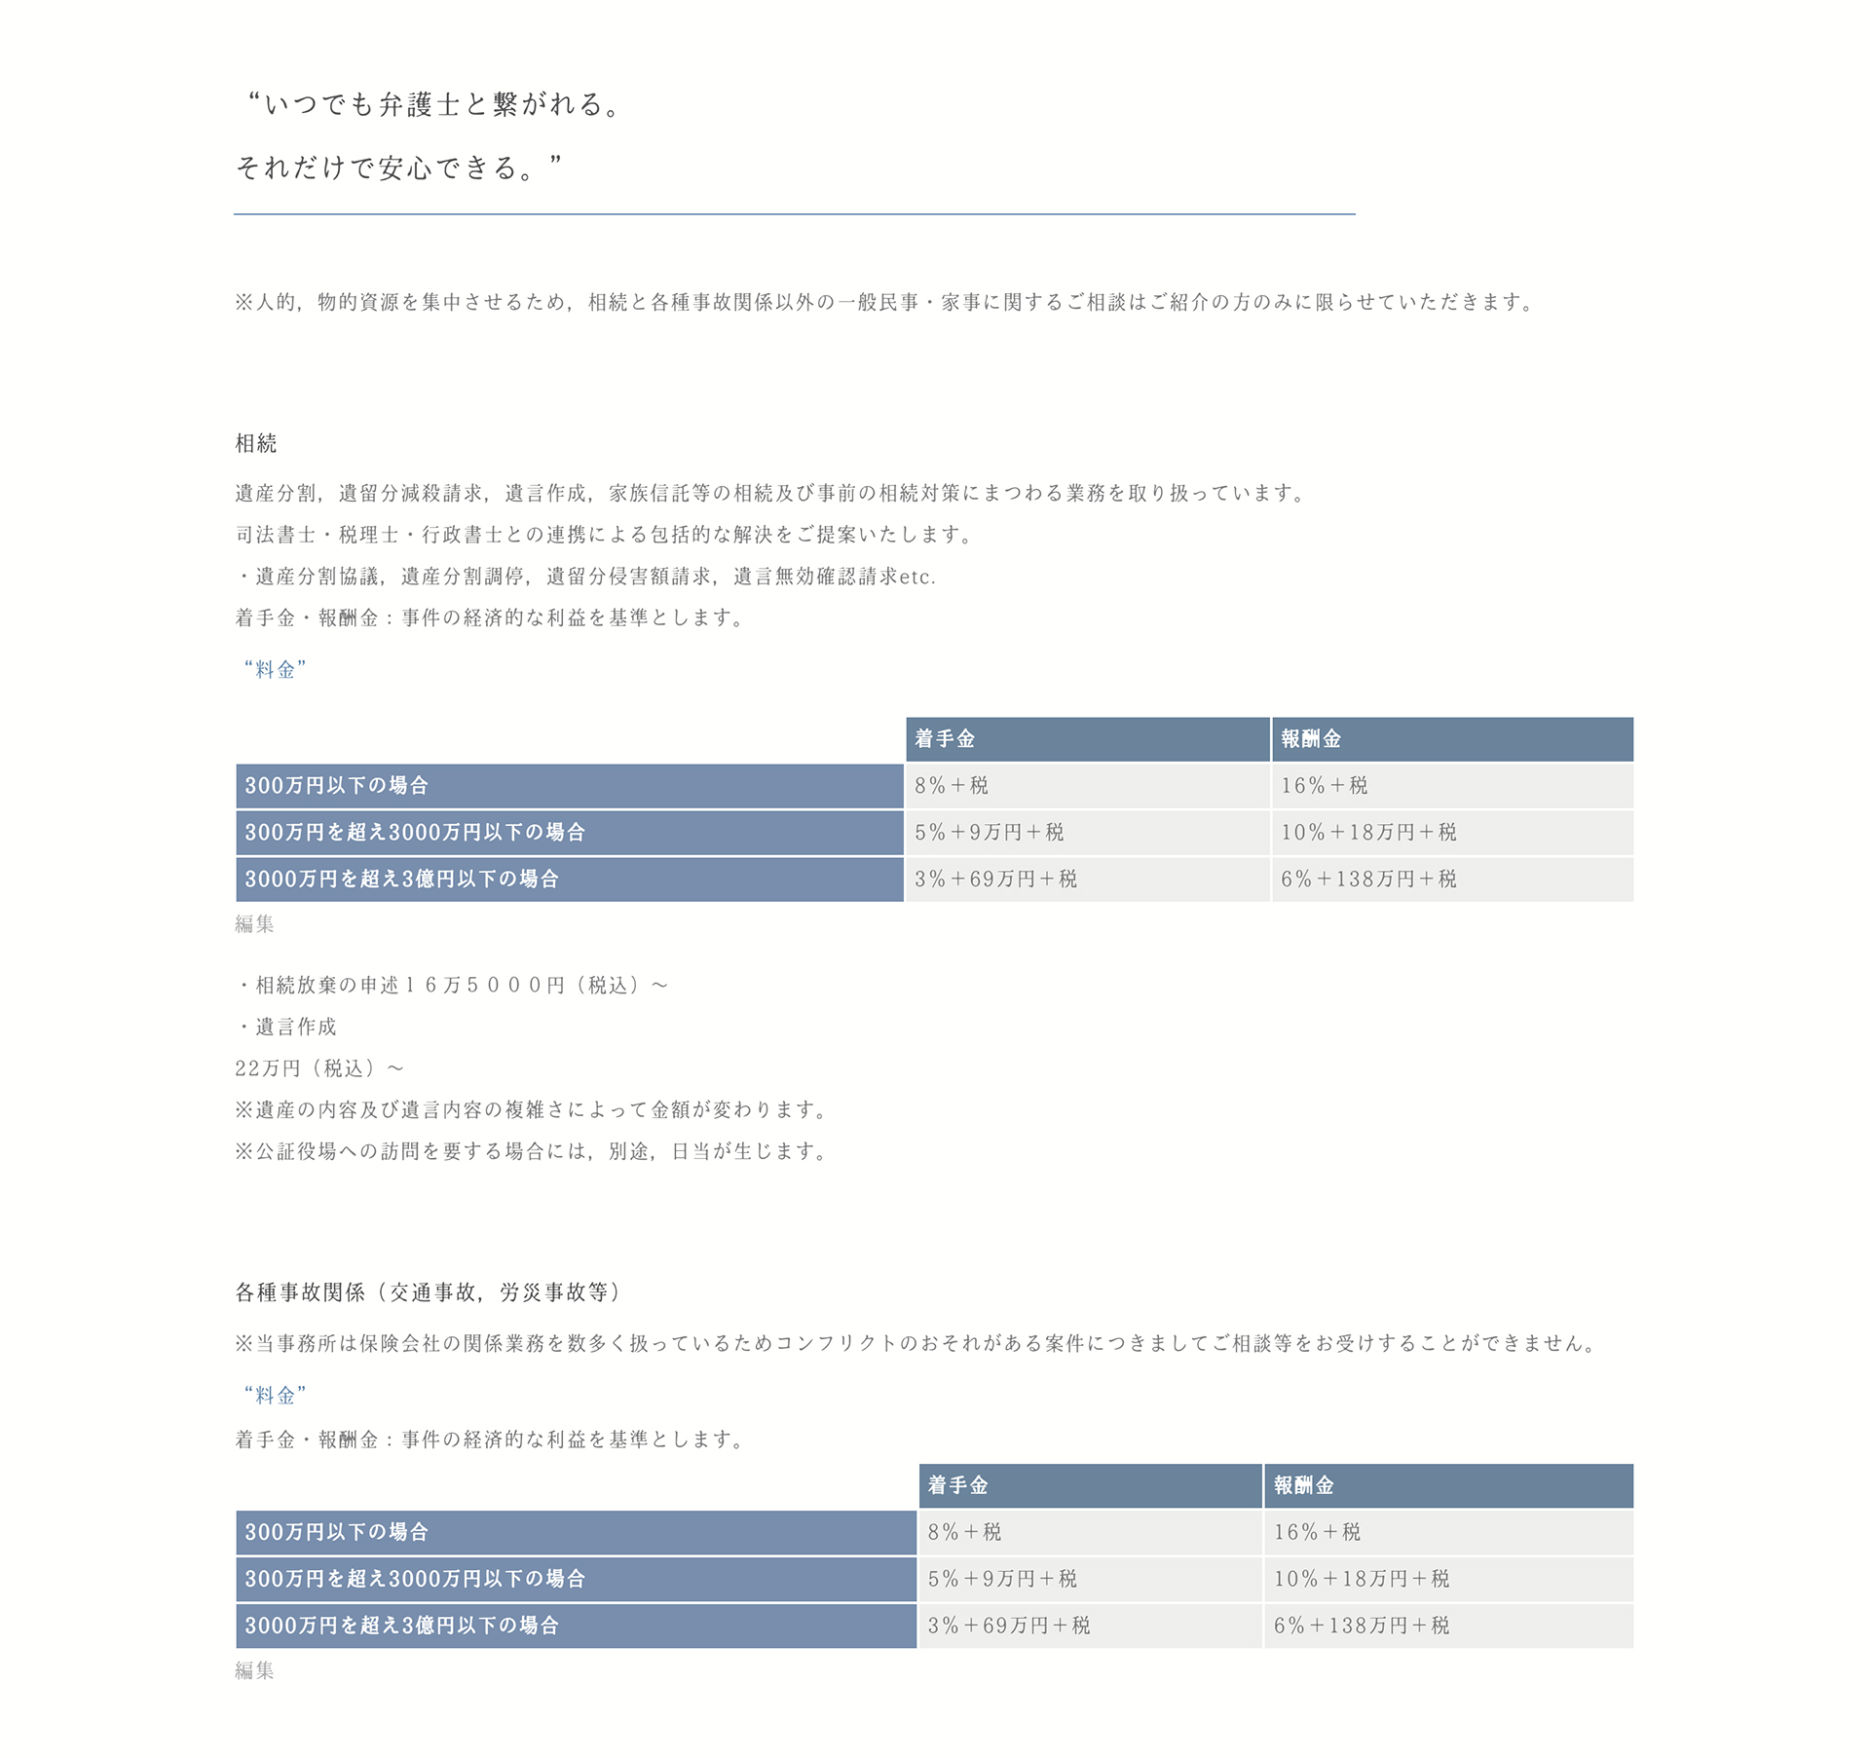 amanokoike3 - ホームページ制作事例。仙台の弁護士法人 天野・小池法律事務所様